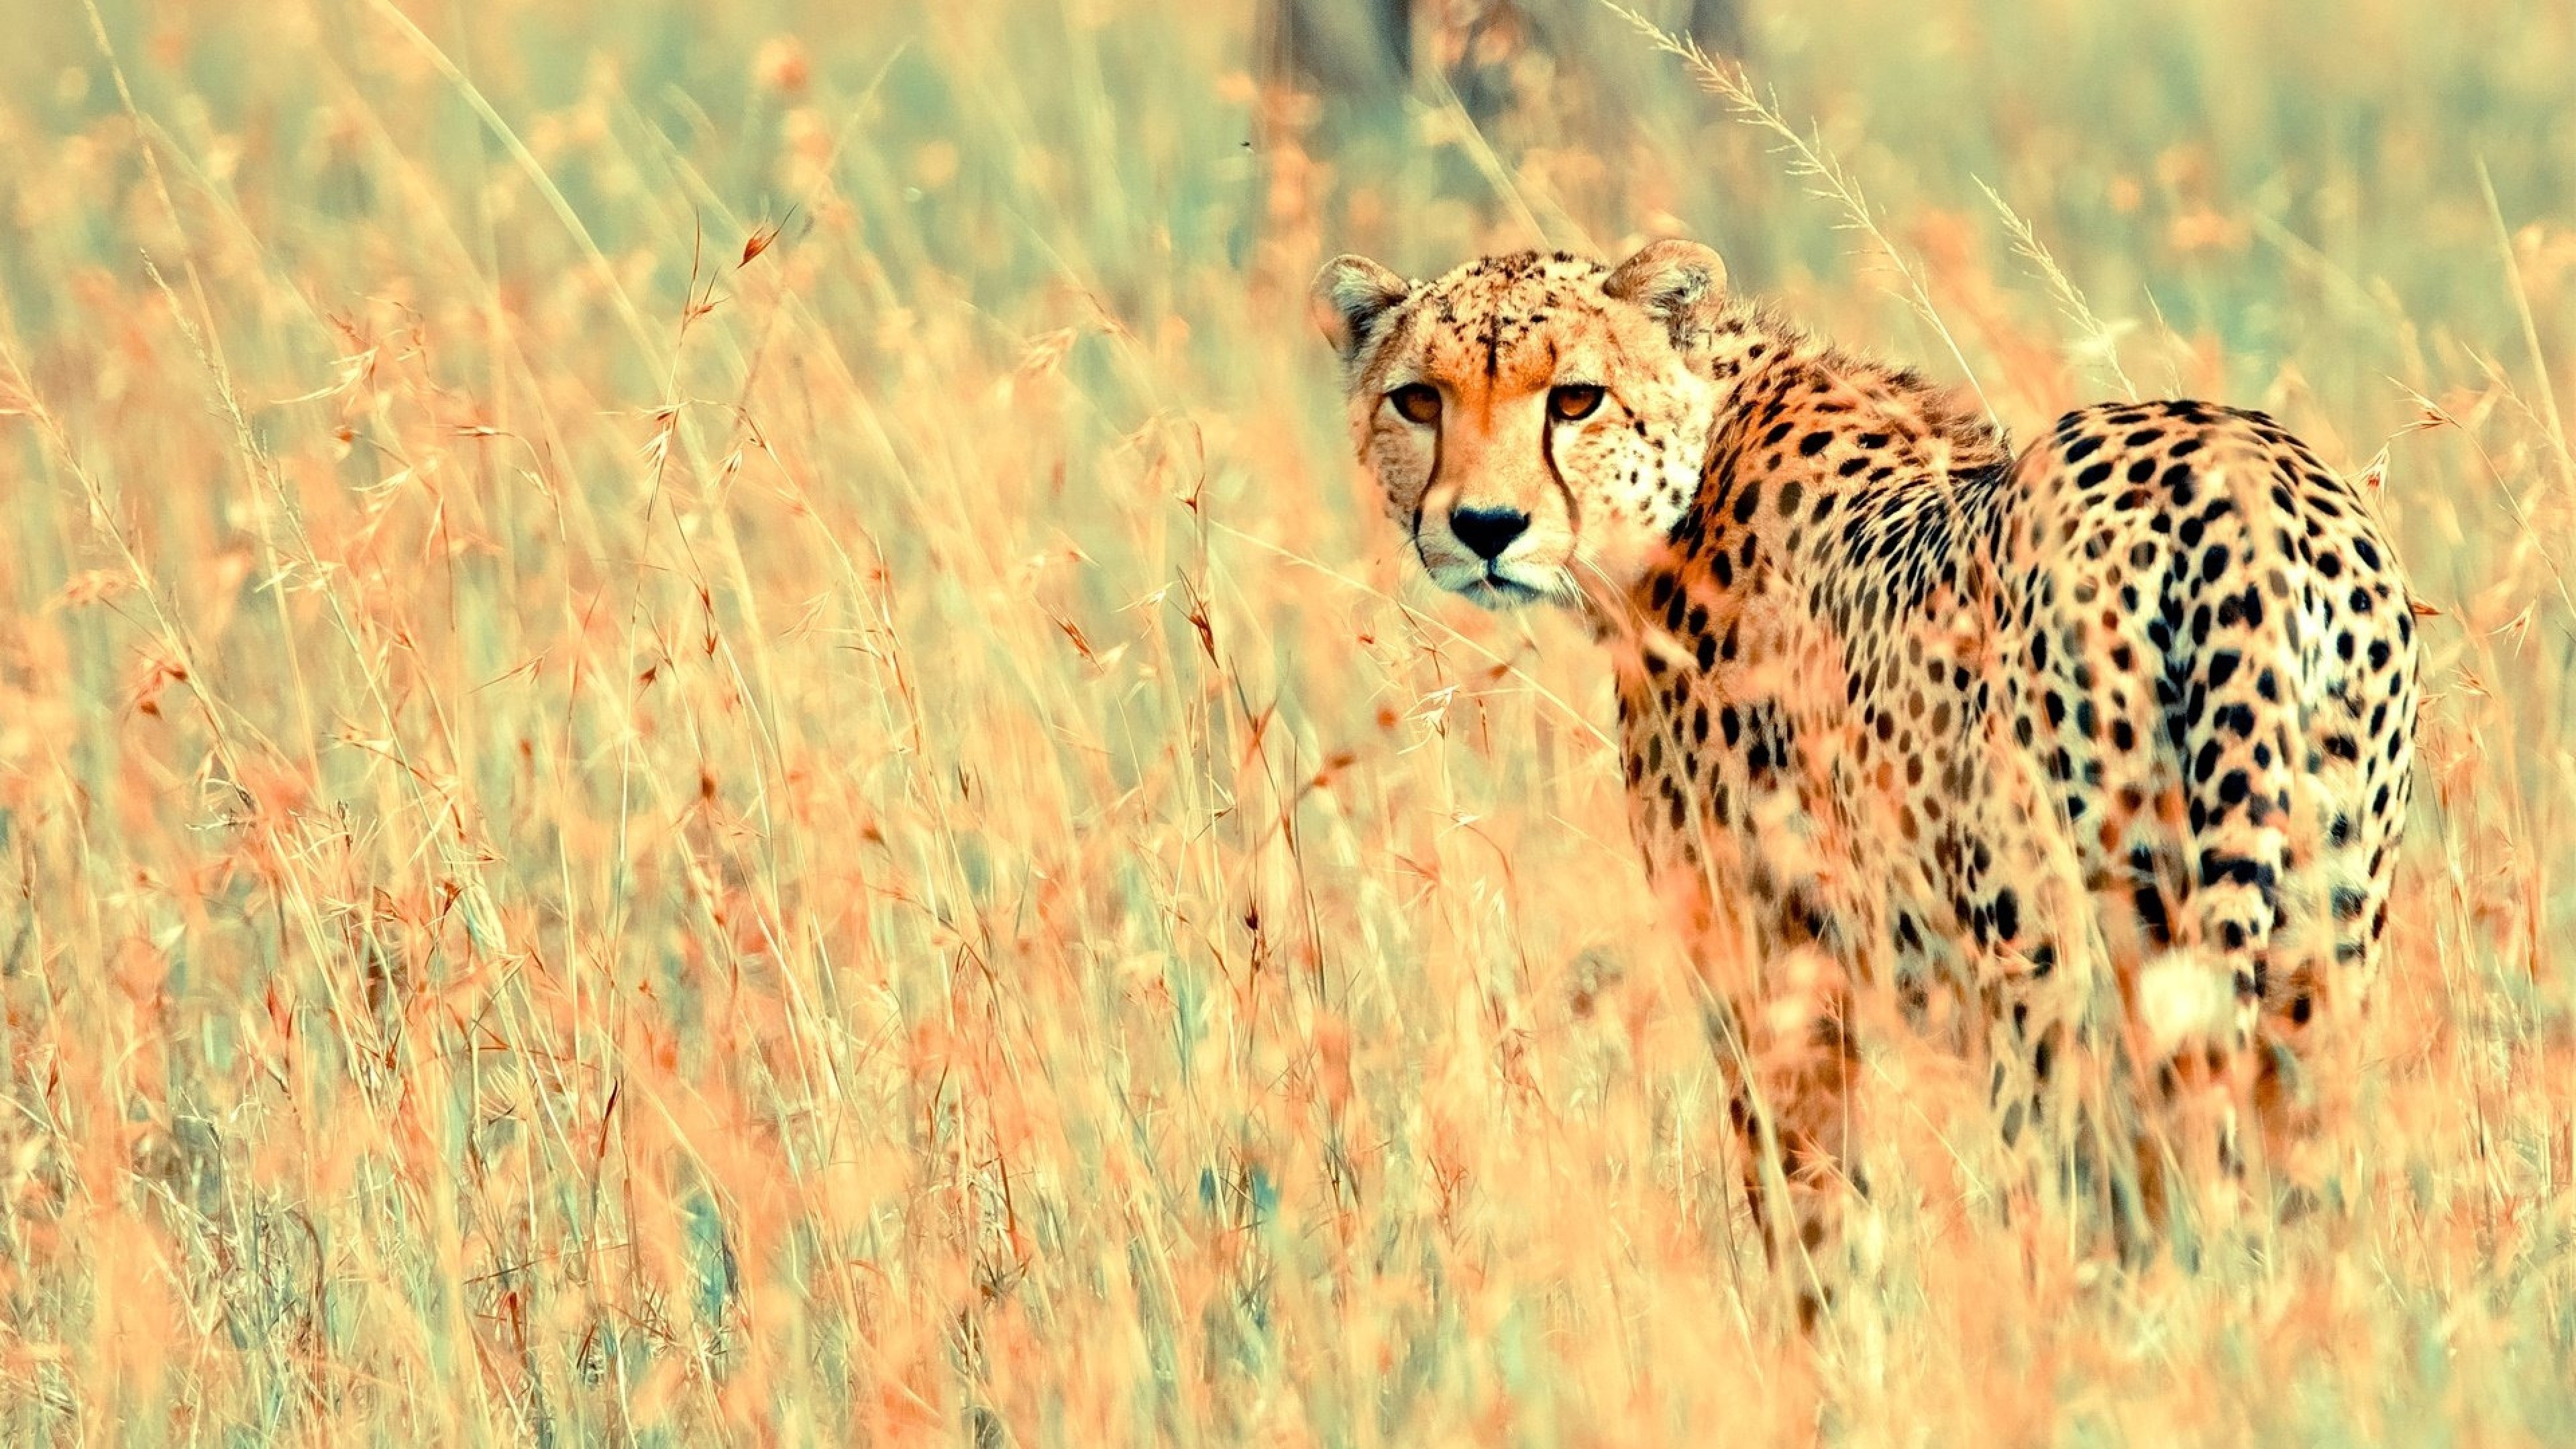 Cheetah in the field, Wildlife predator, Stunning UHD TV wallpaper, Untamed beauty, 3840x2160 4K Desktop